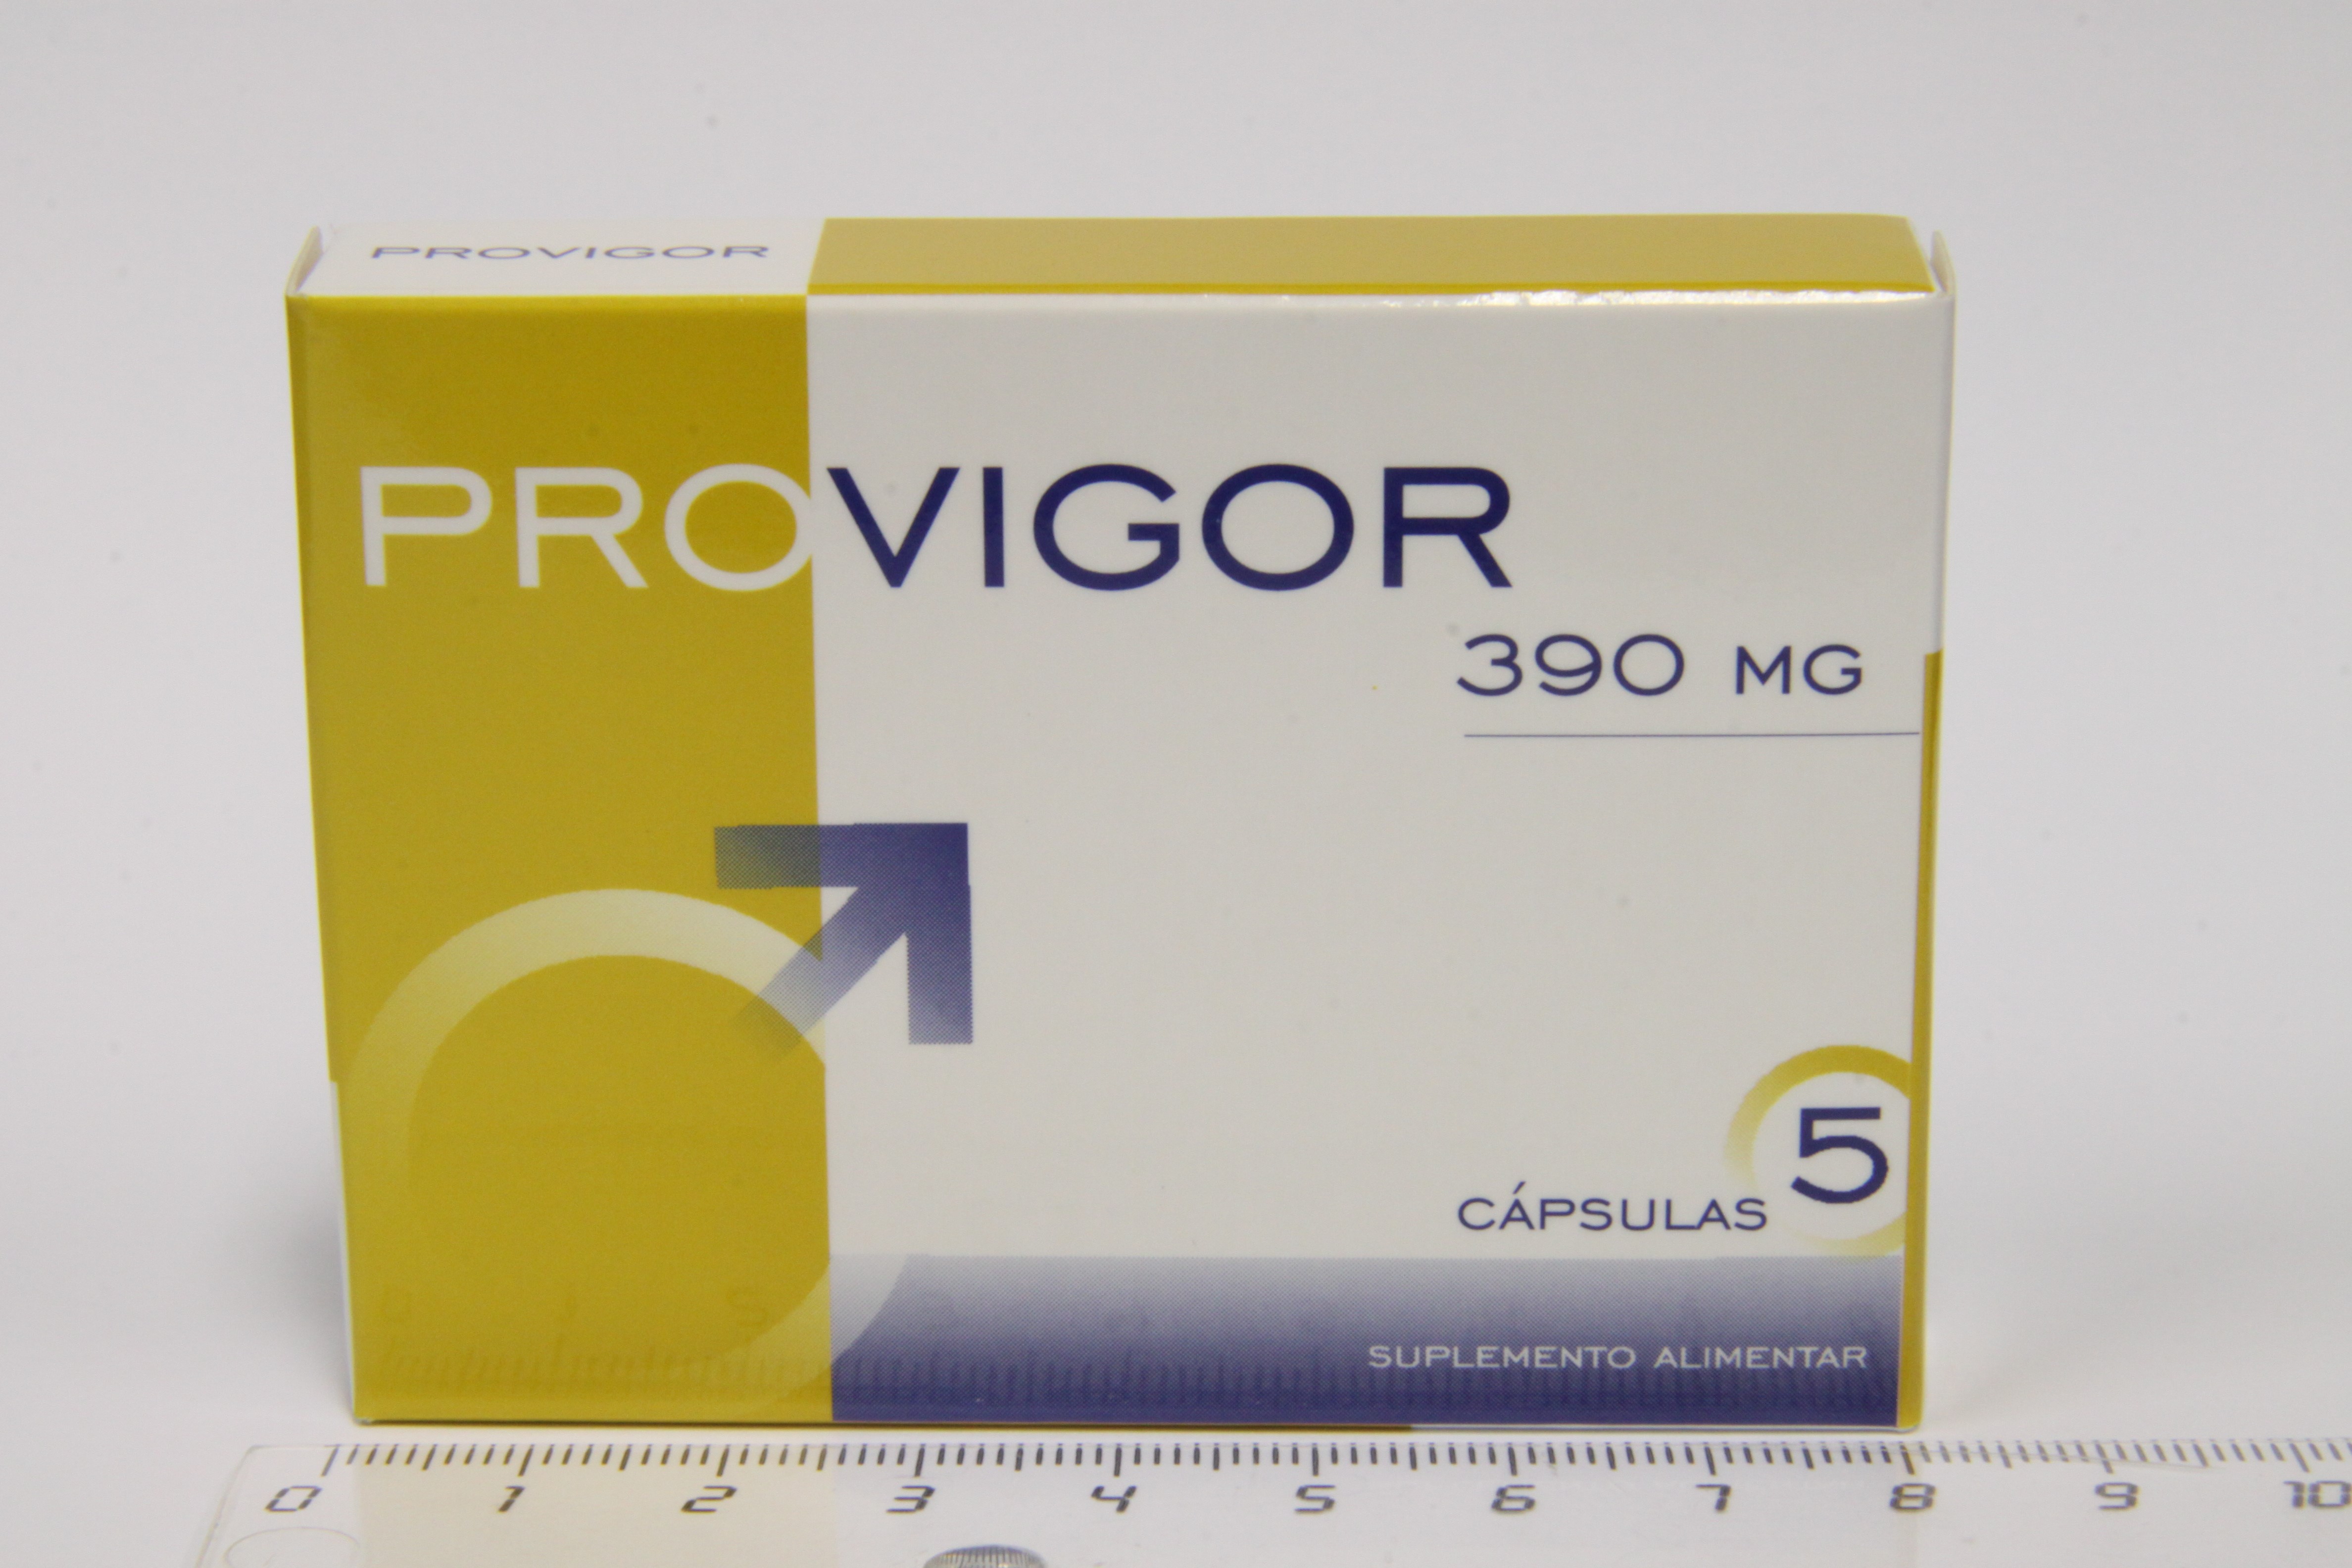 Image of the illigal product: Provigor